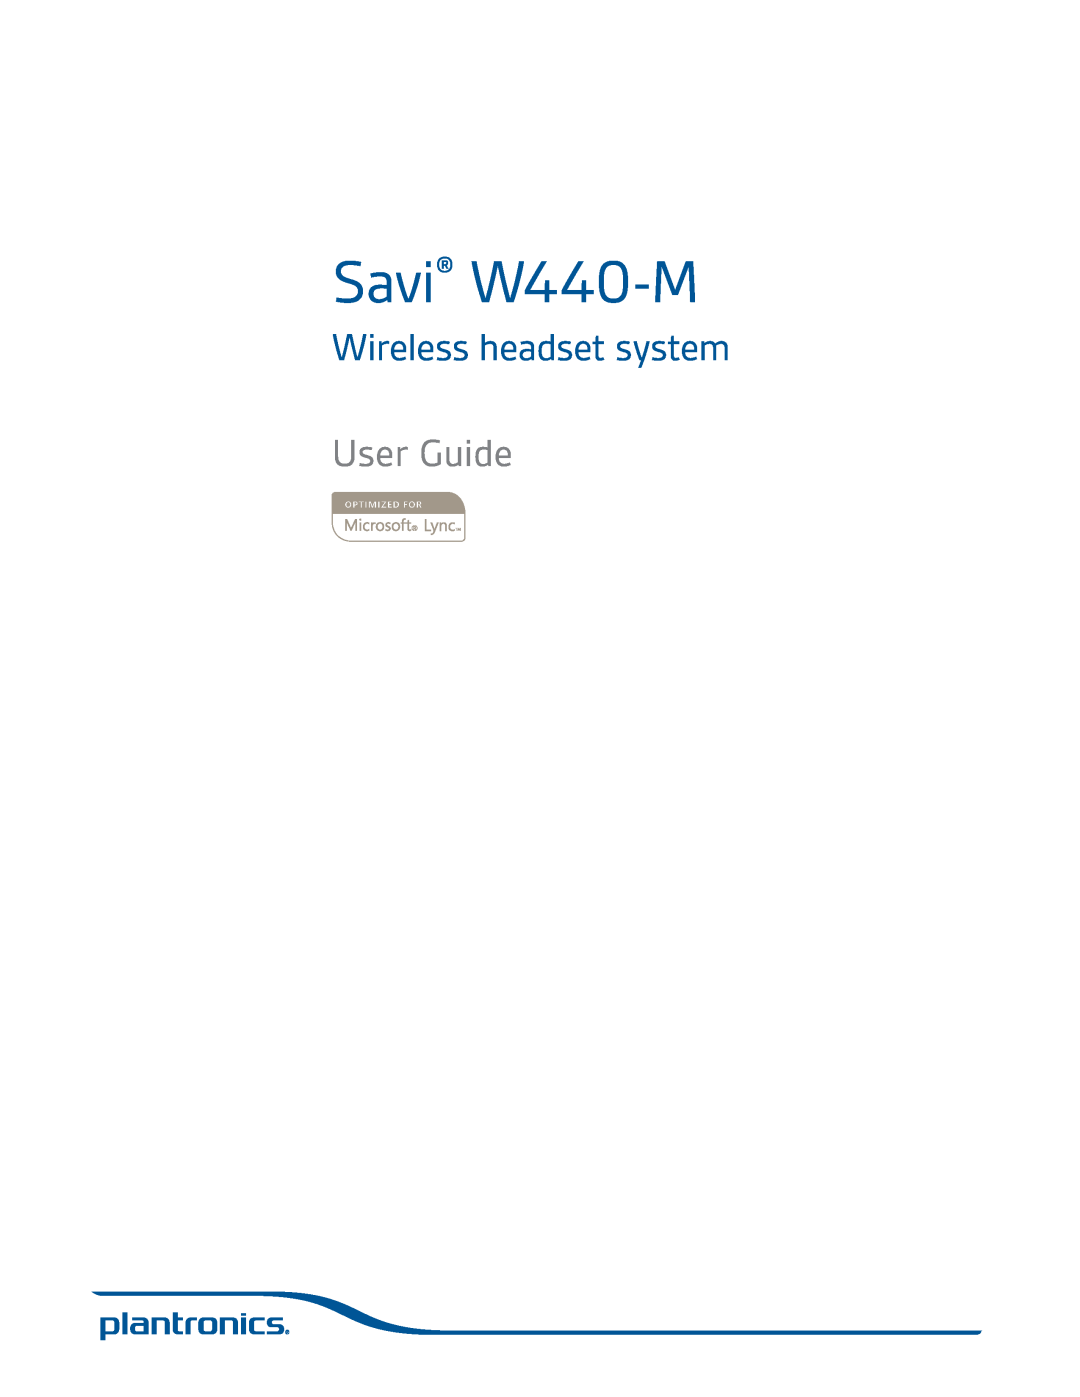 Plantronics manual Savi W440-M, Wireless headset system, User Guide 